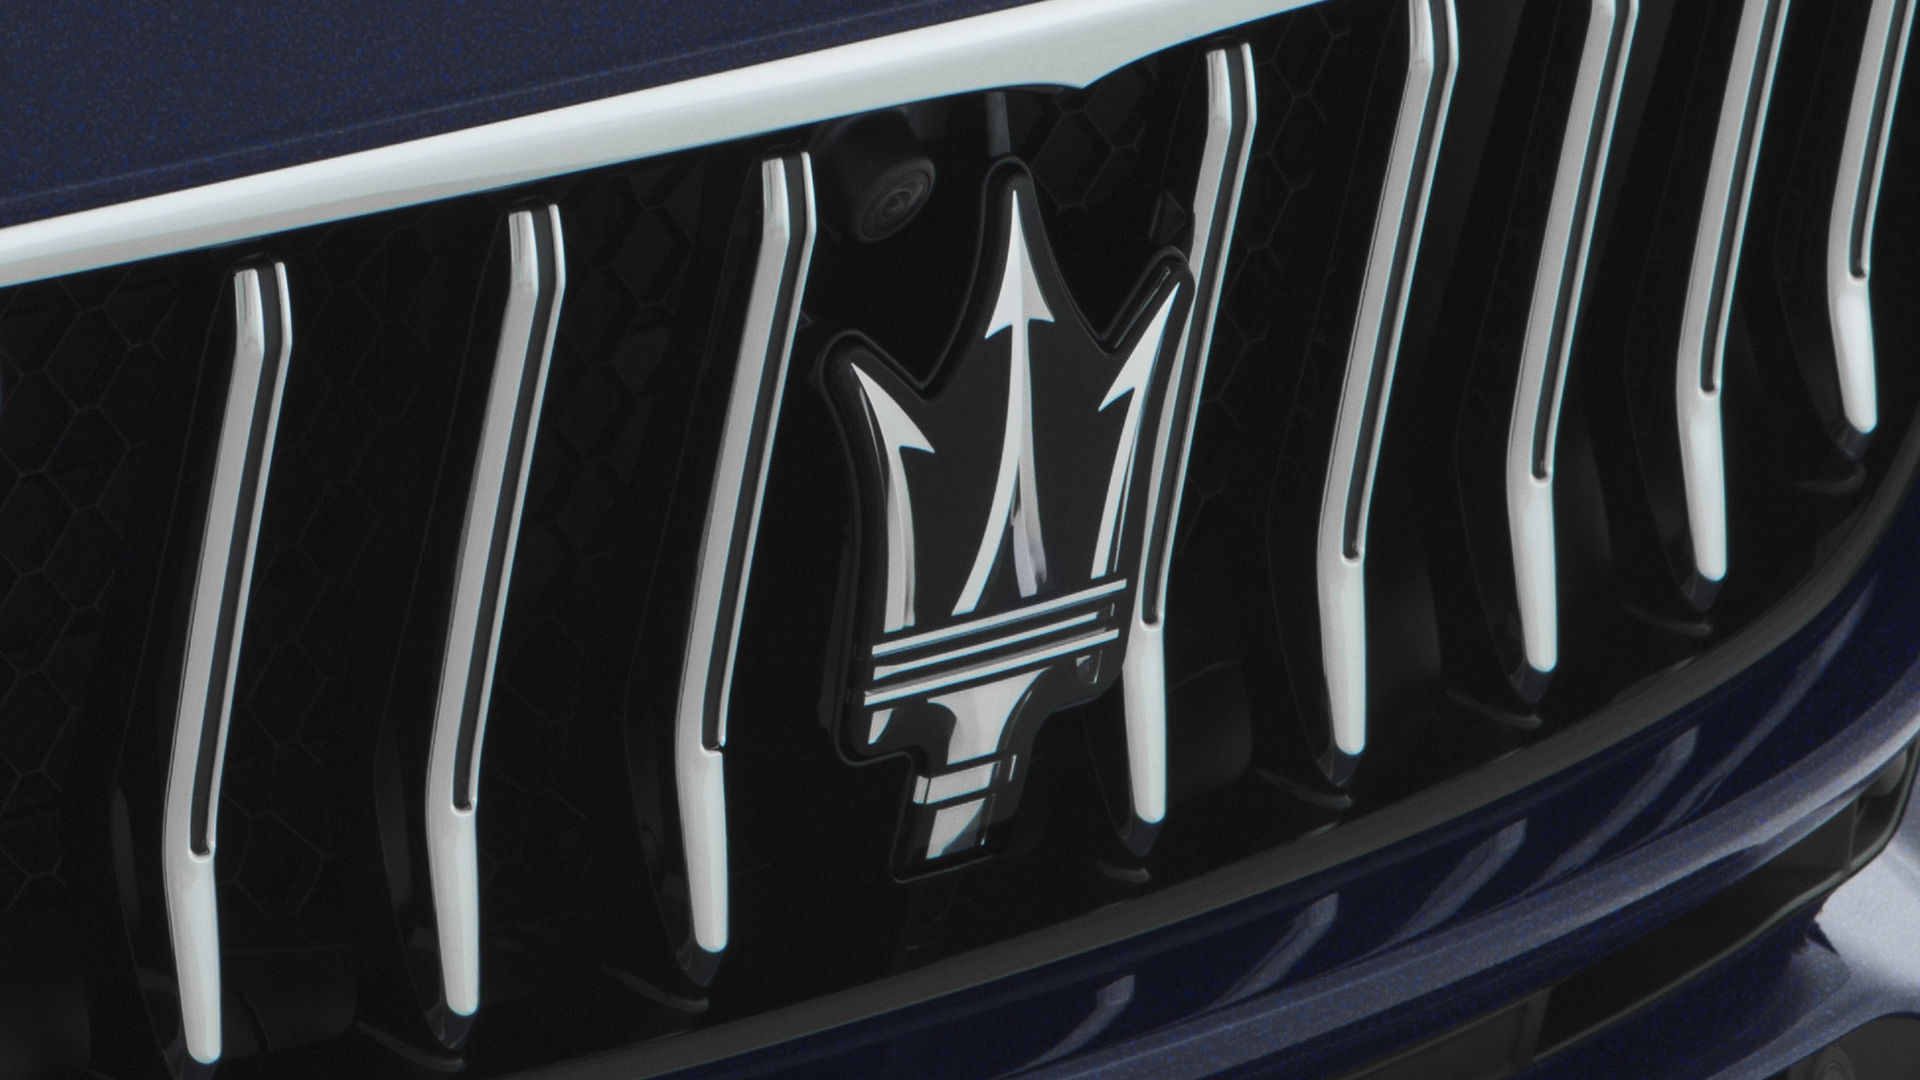 Trident logo on Bumper of Quattroporte